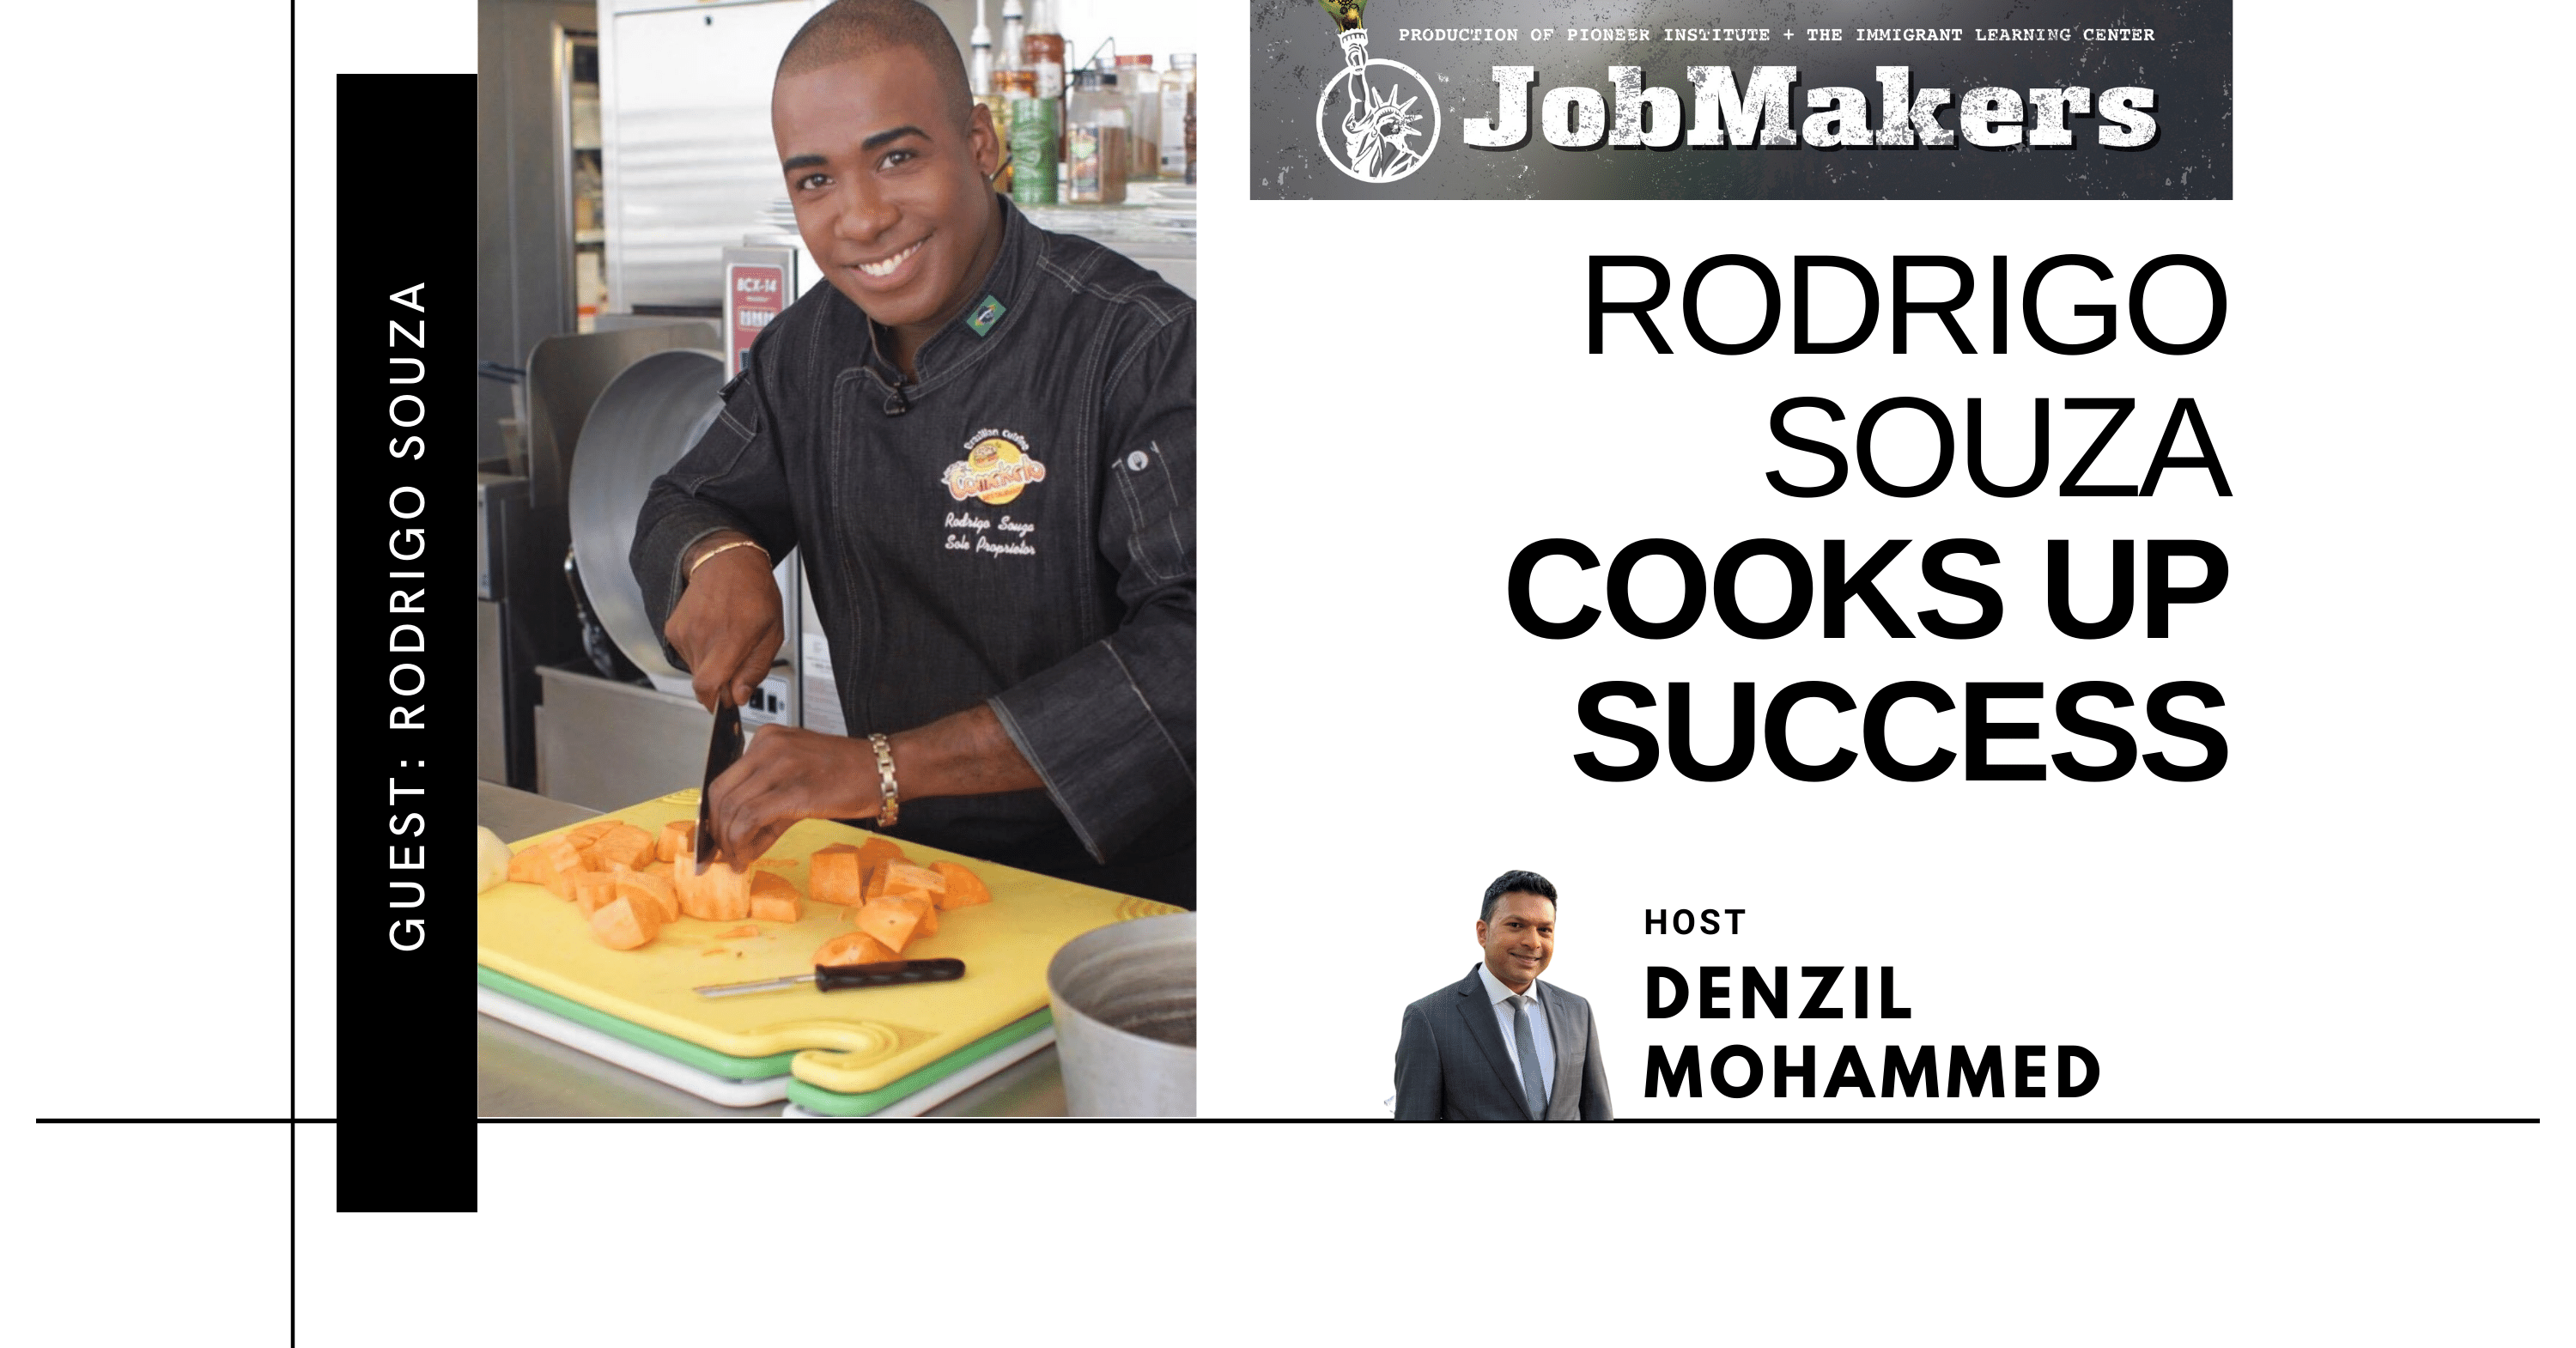 JobMakers podcast logo: Rodrigo Souza cooks up success